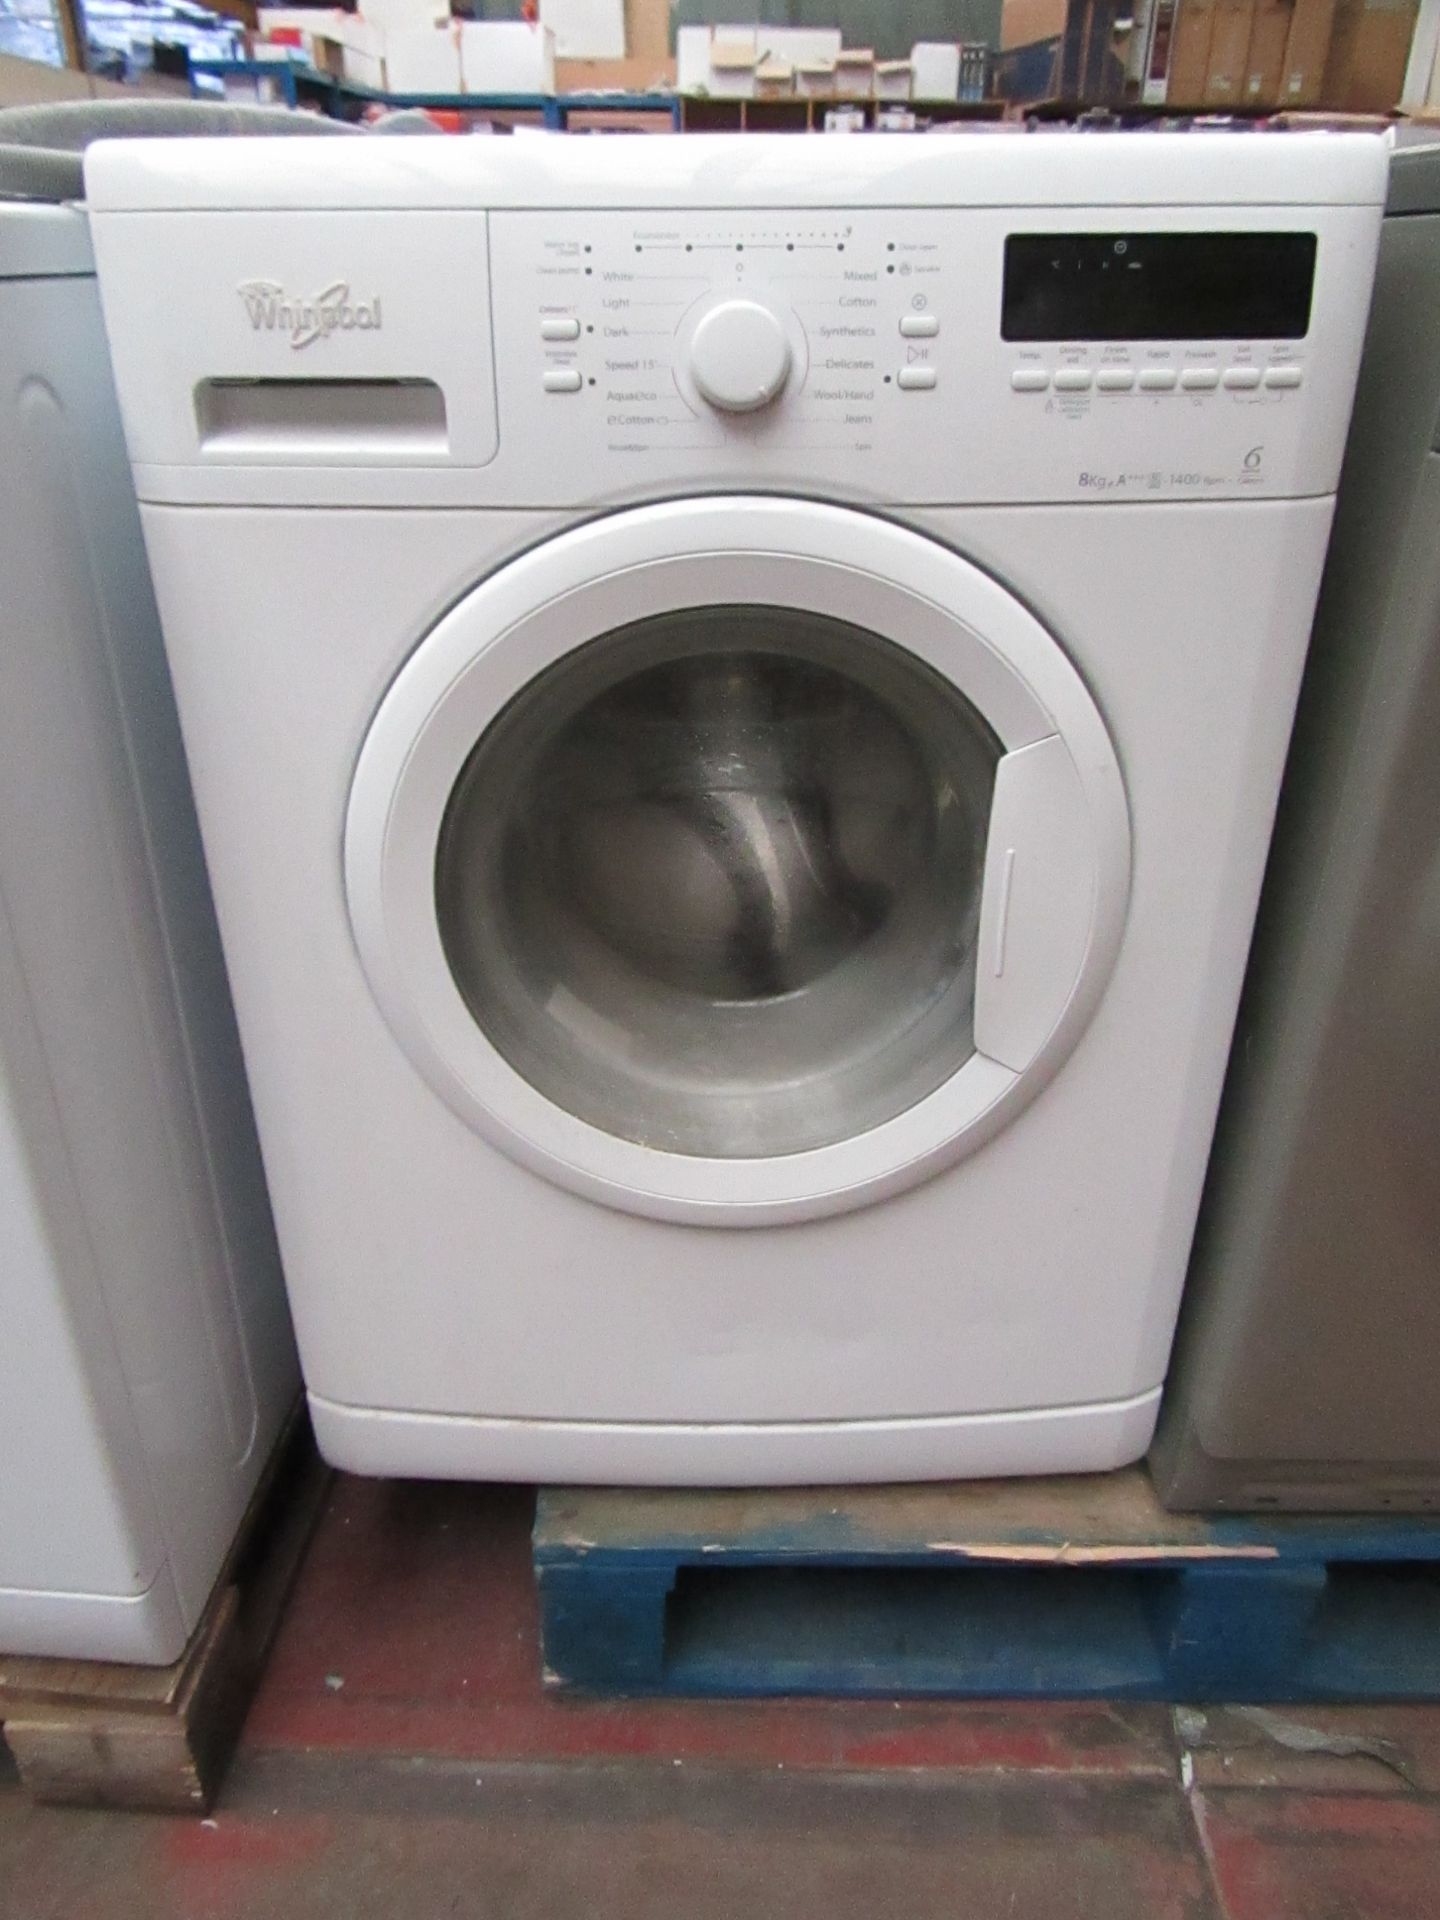 Whirlpool 8kg a+++ 1400 rpm 6th sense colours washing machine, no power